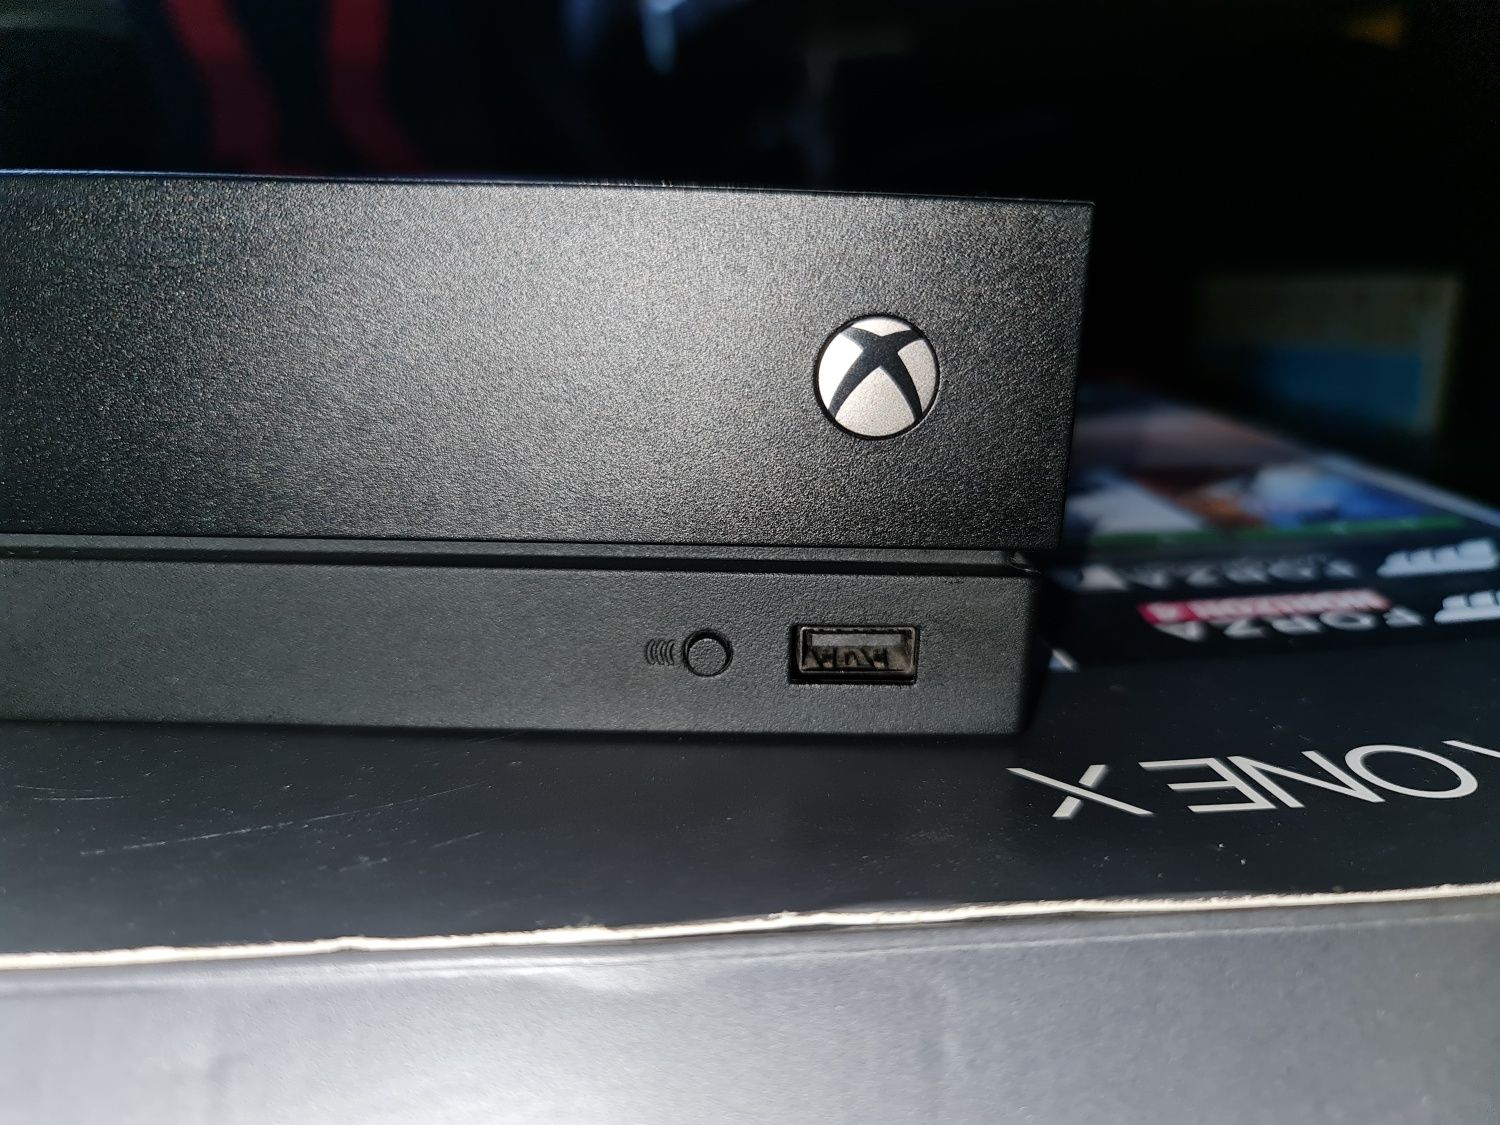 Xbox one x pad + akumulator do pada + gry